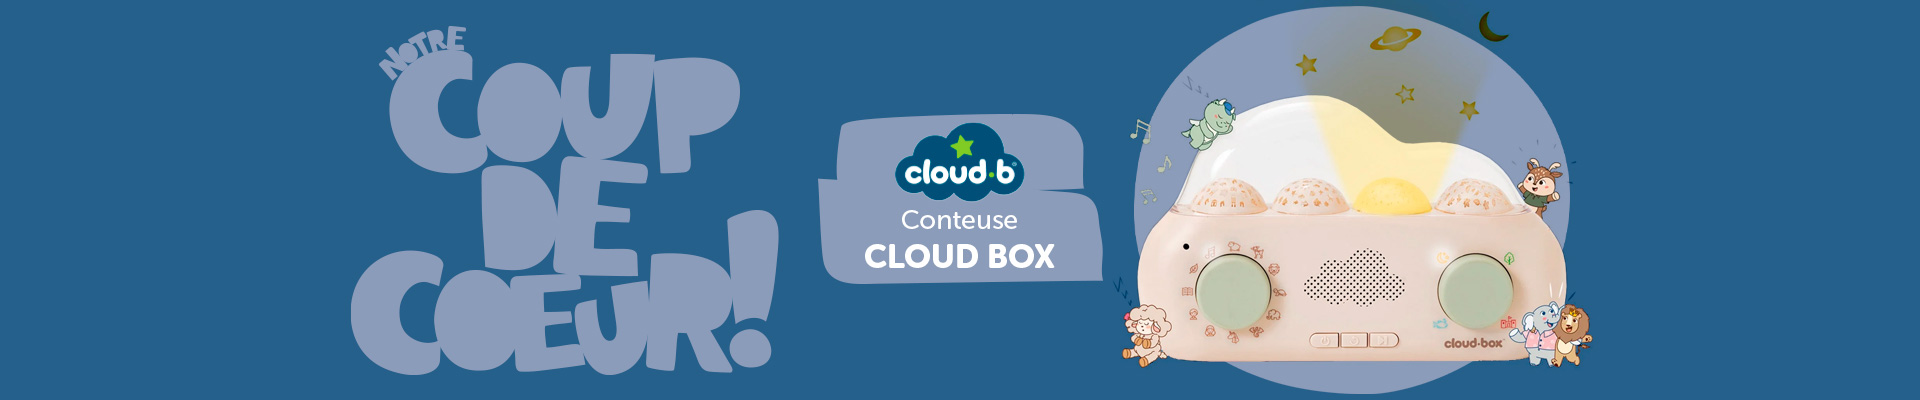 cloudbox